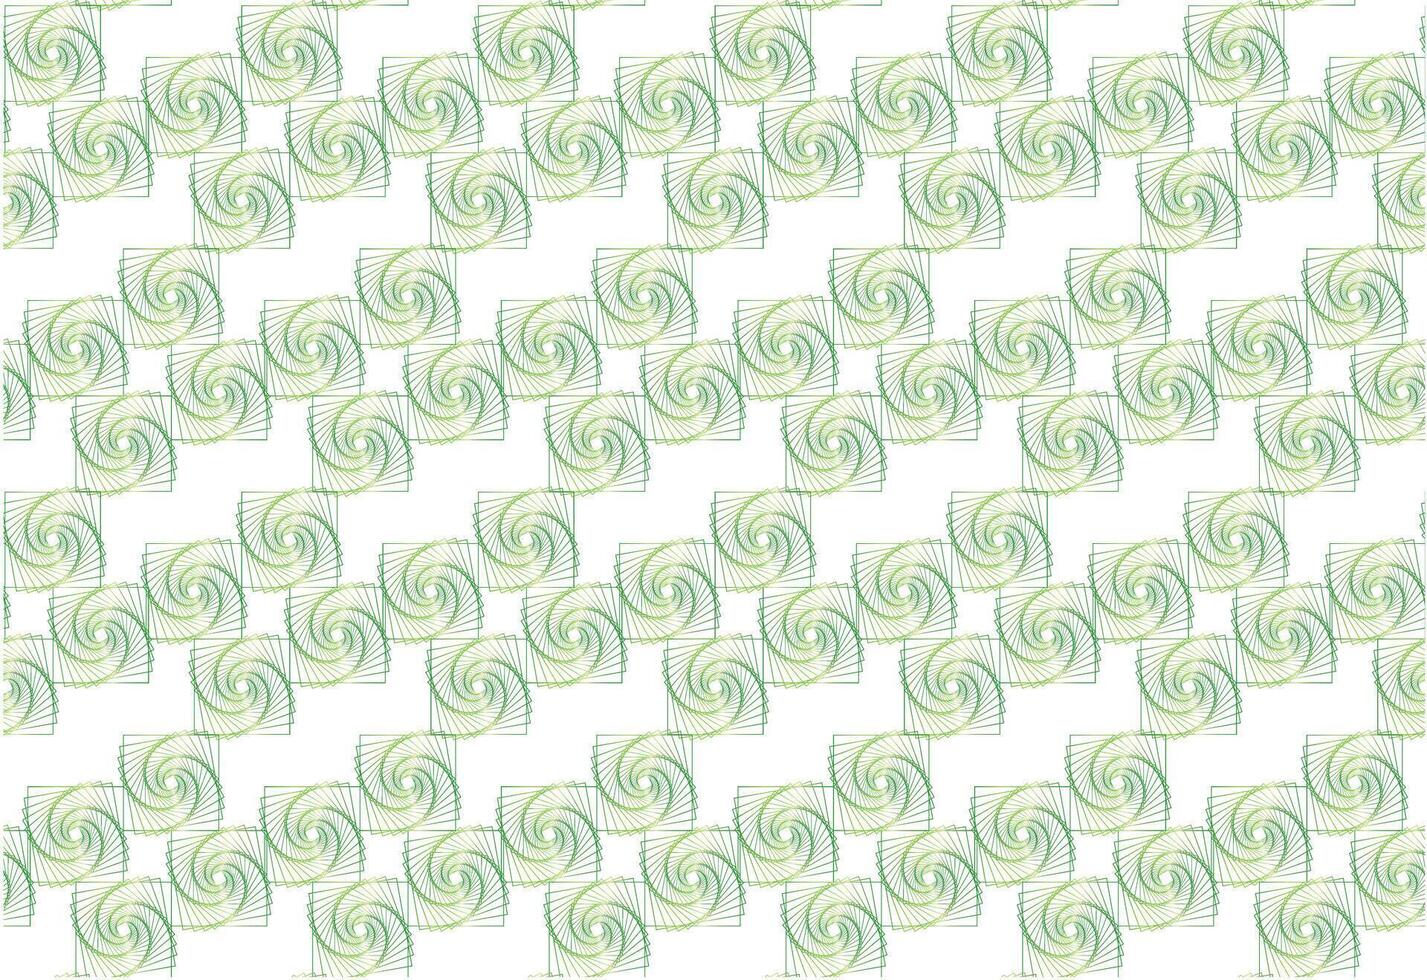 illustration mönster, abstrakt geometrisk stil. upprepa av abstrakt grön lutning linje i fyrkant på vit bakgrund. vektor